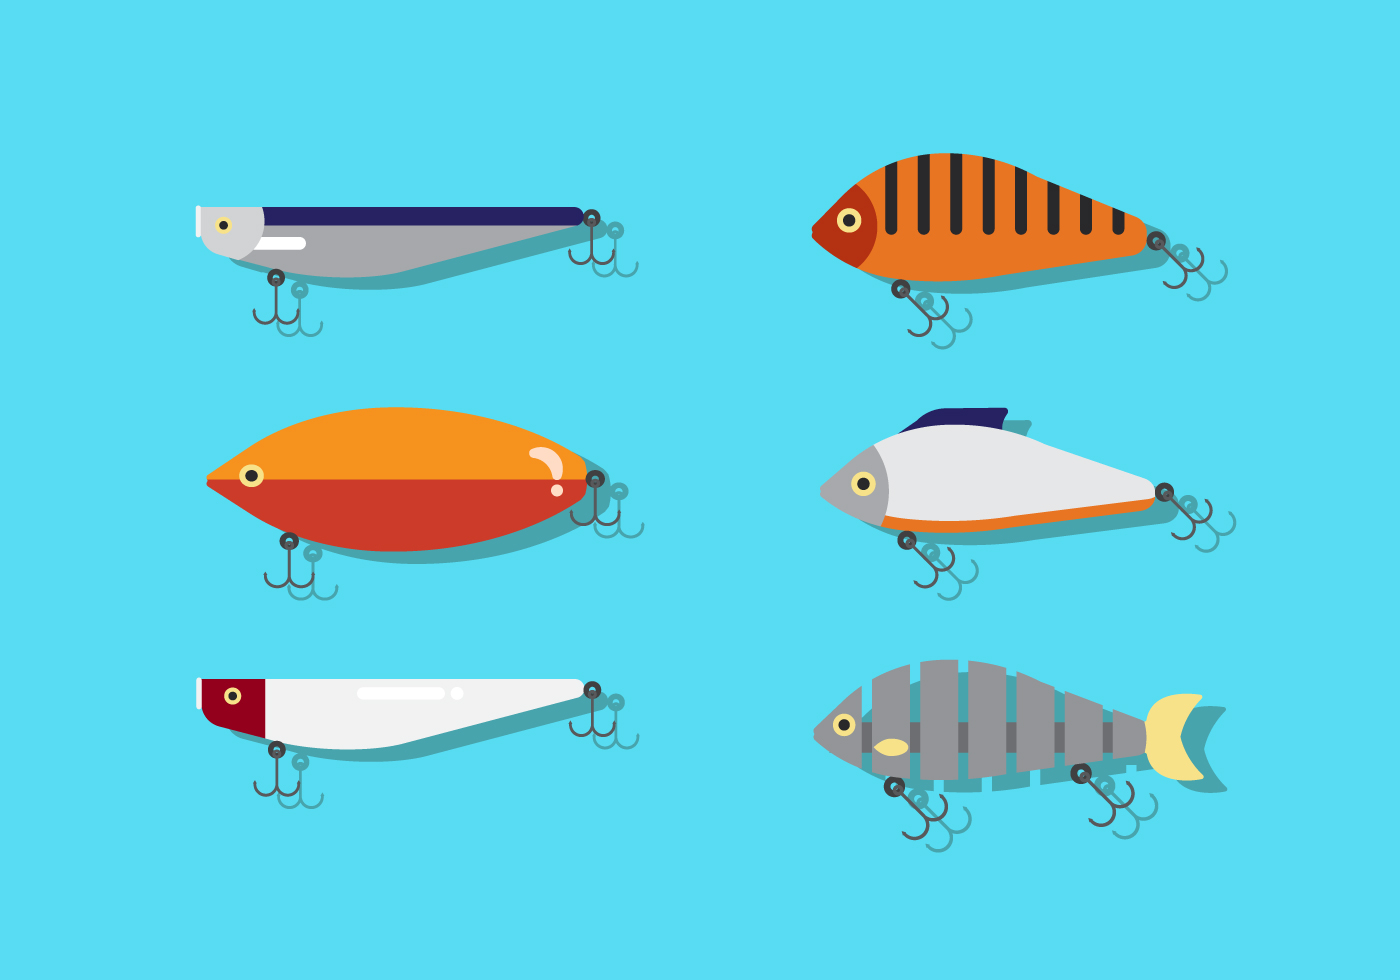 Download Vector Fishing Lure - Download Free Vector Art, Stock ...